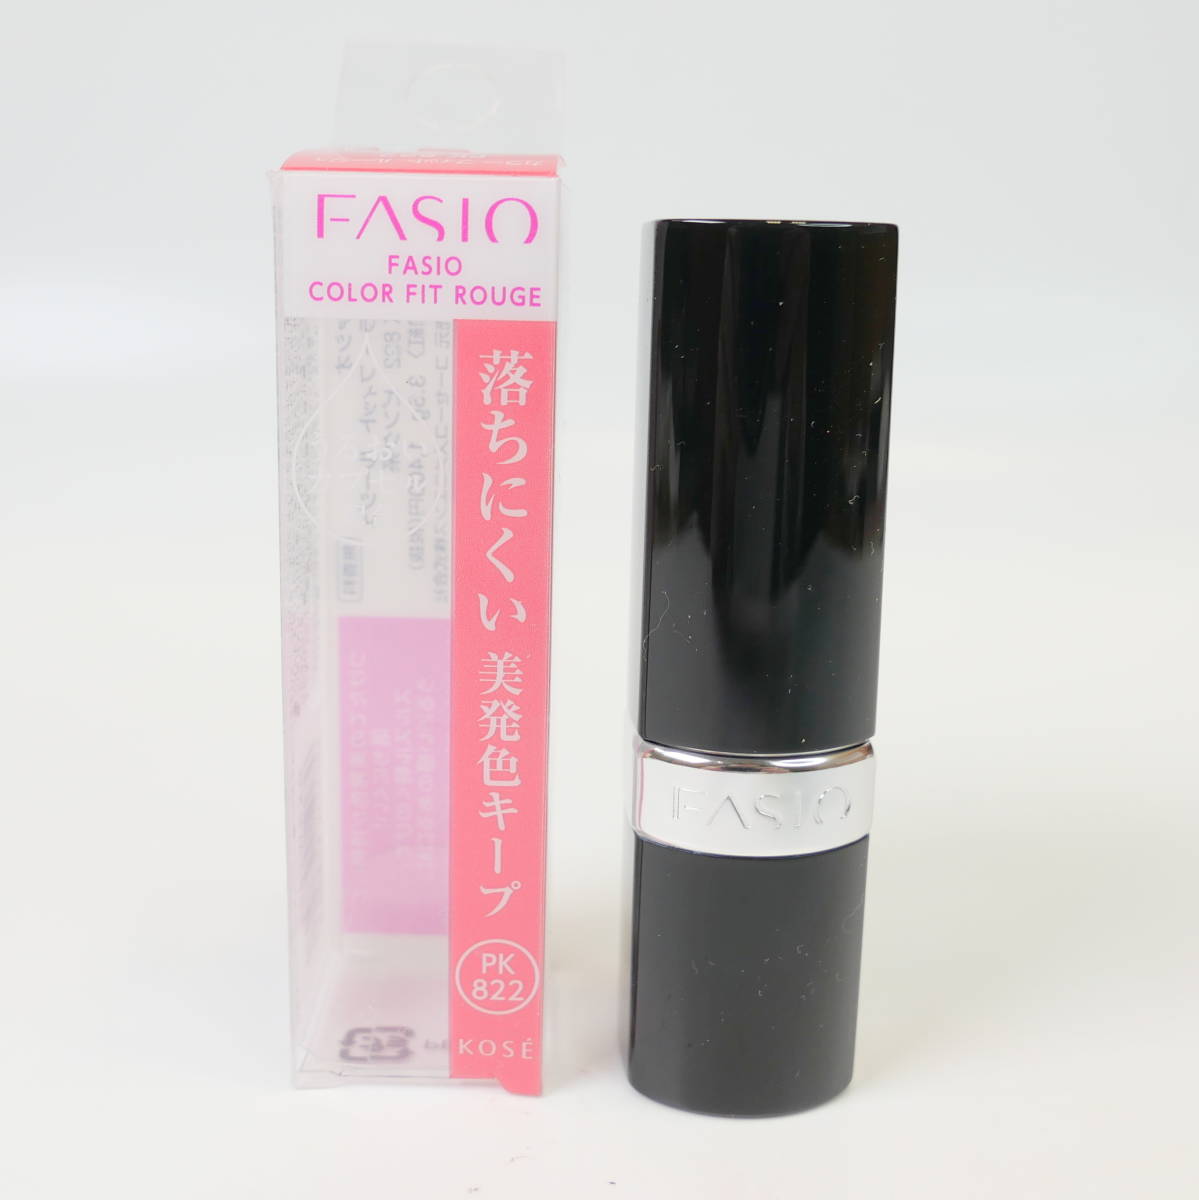  used cosme * Kose FASIO Fasio color Fit rouge lipstick PK822